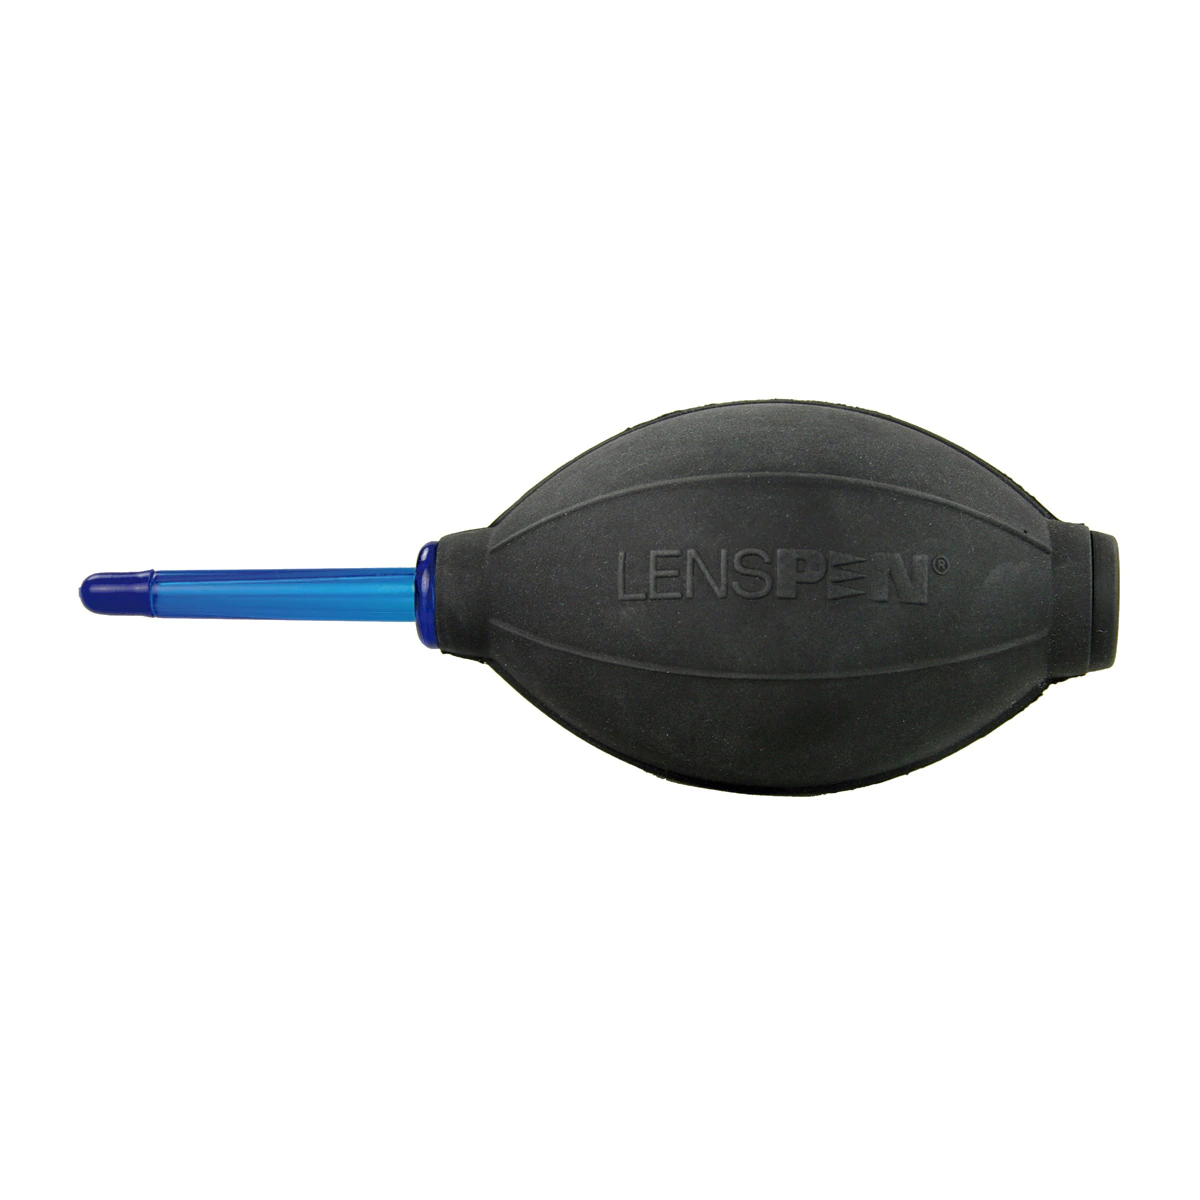 Pera de aire para lentes Lenspen HB-1